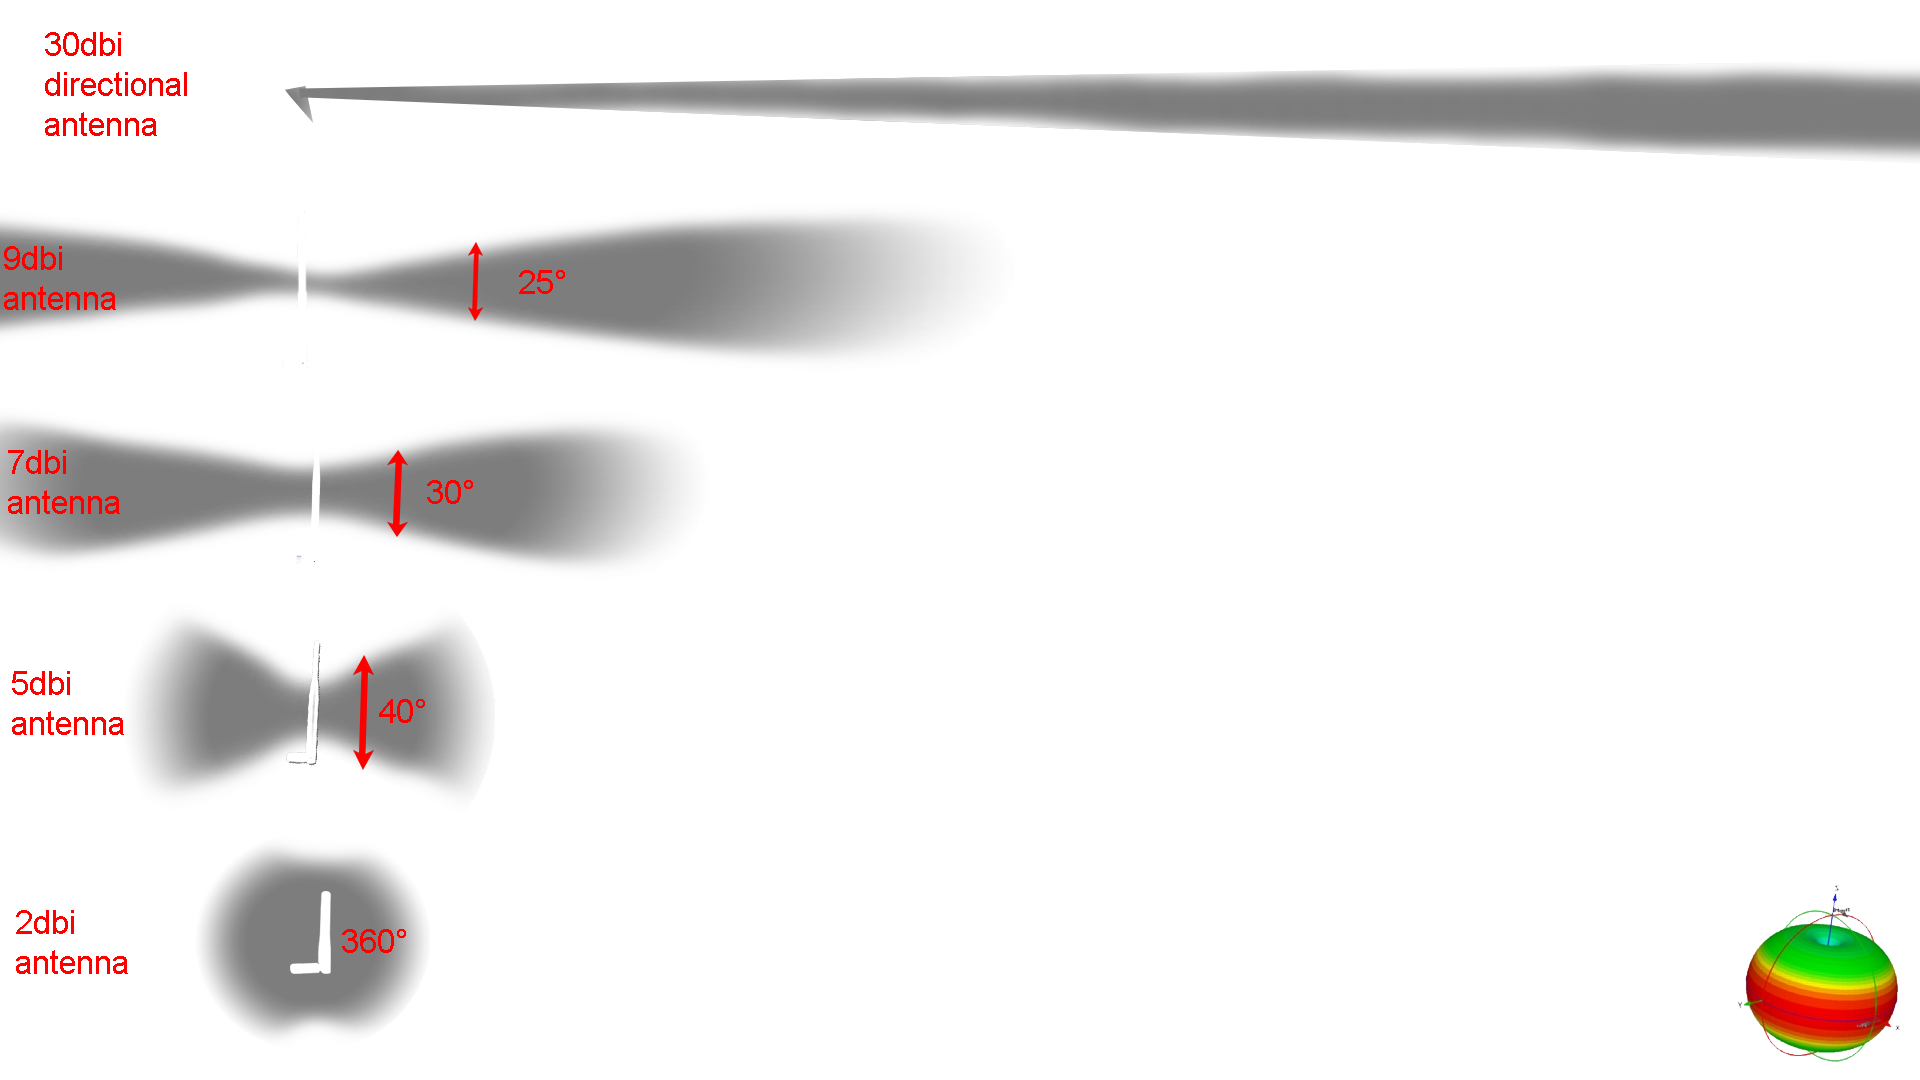 antenna dBi strength visual graph